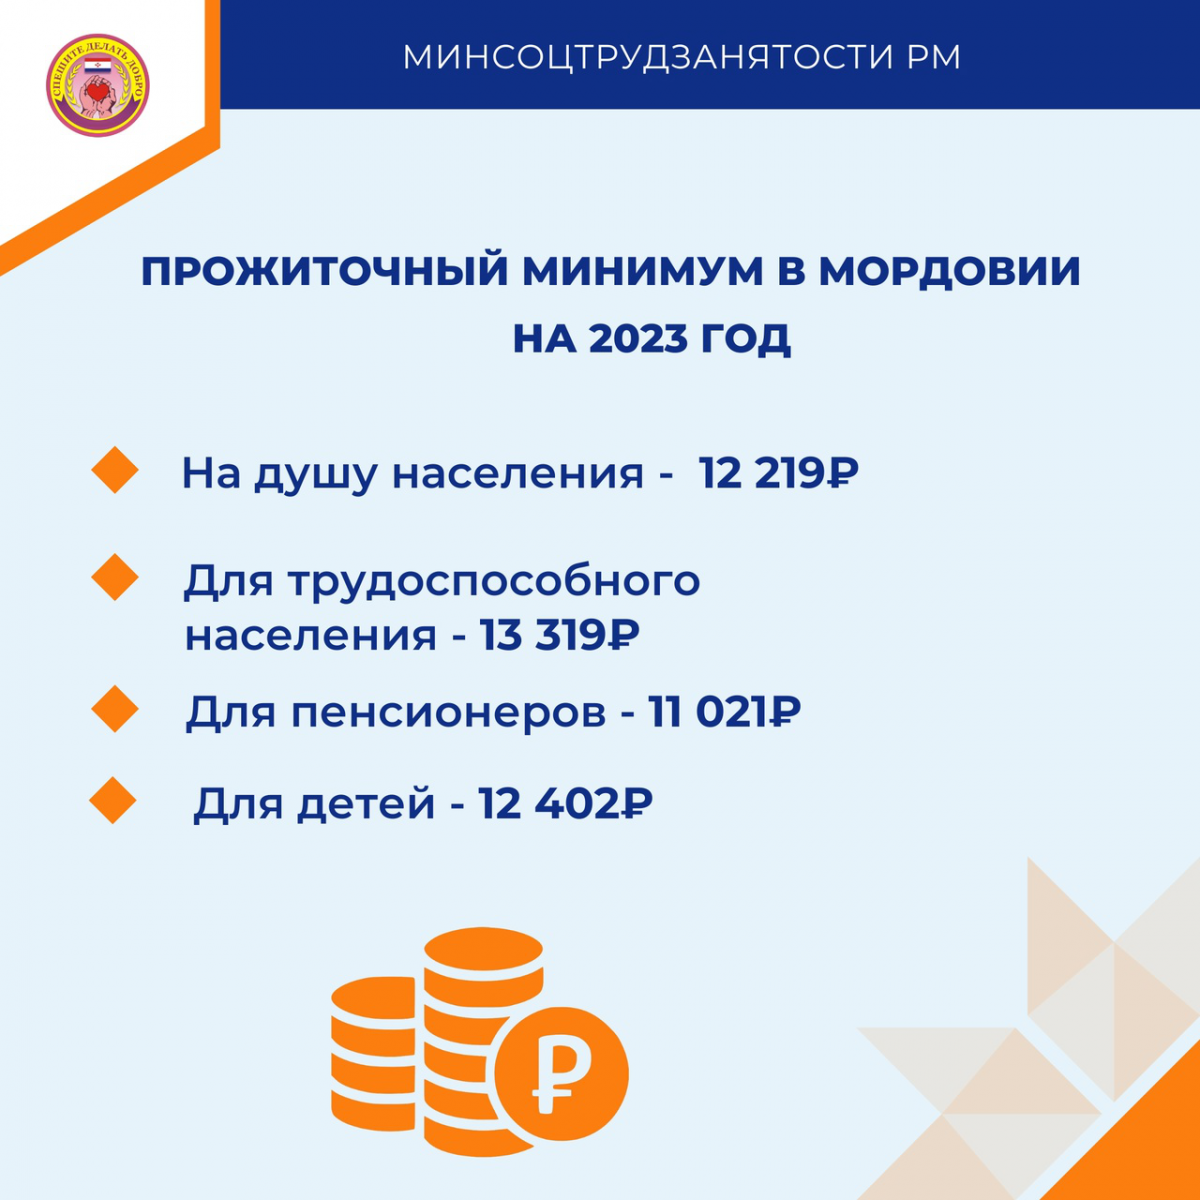 Установлена величина прожиточного минимума в Республике Мордовия на 2023 год